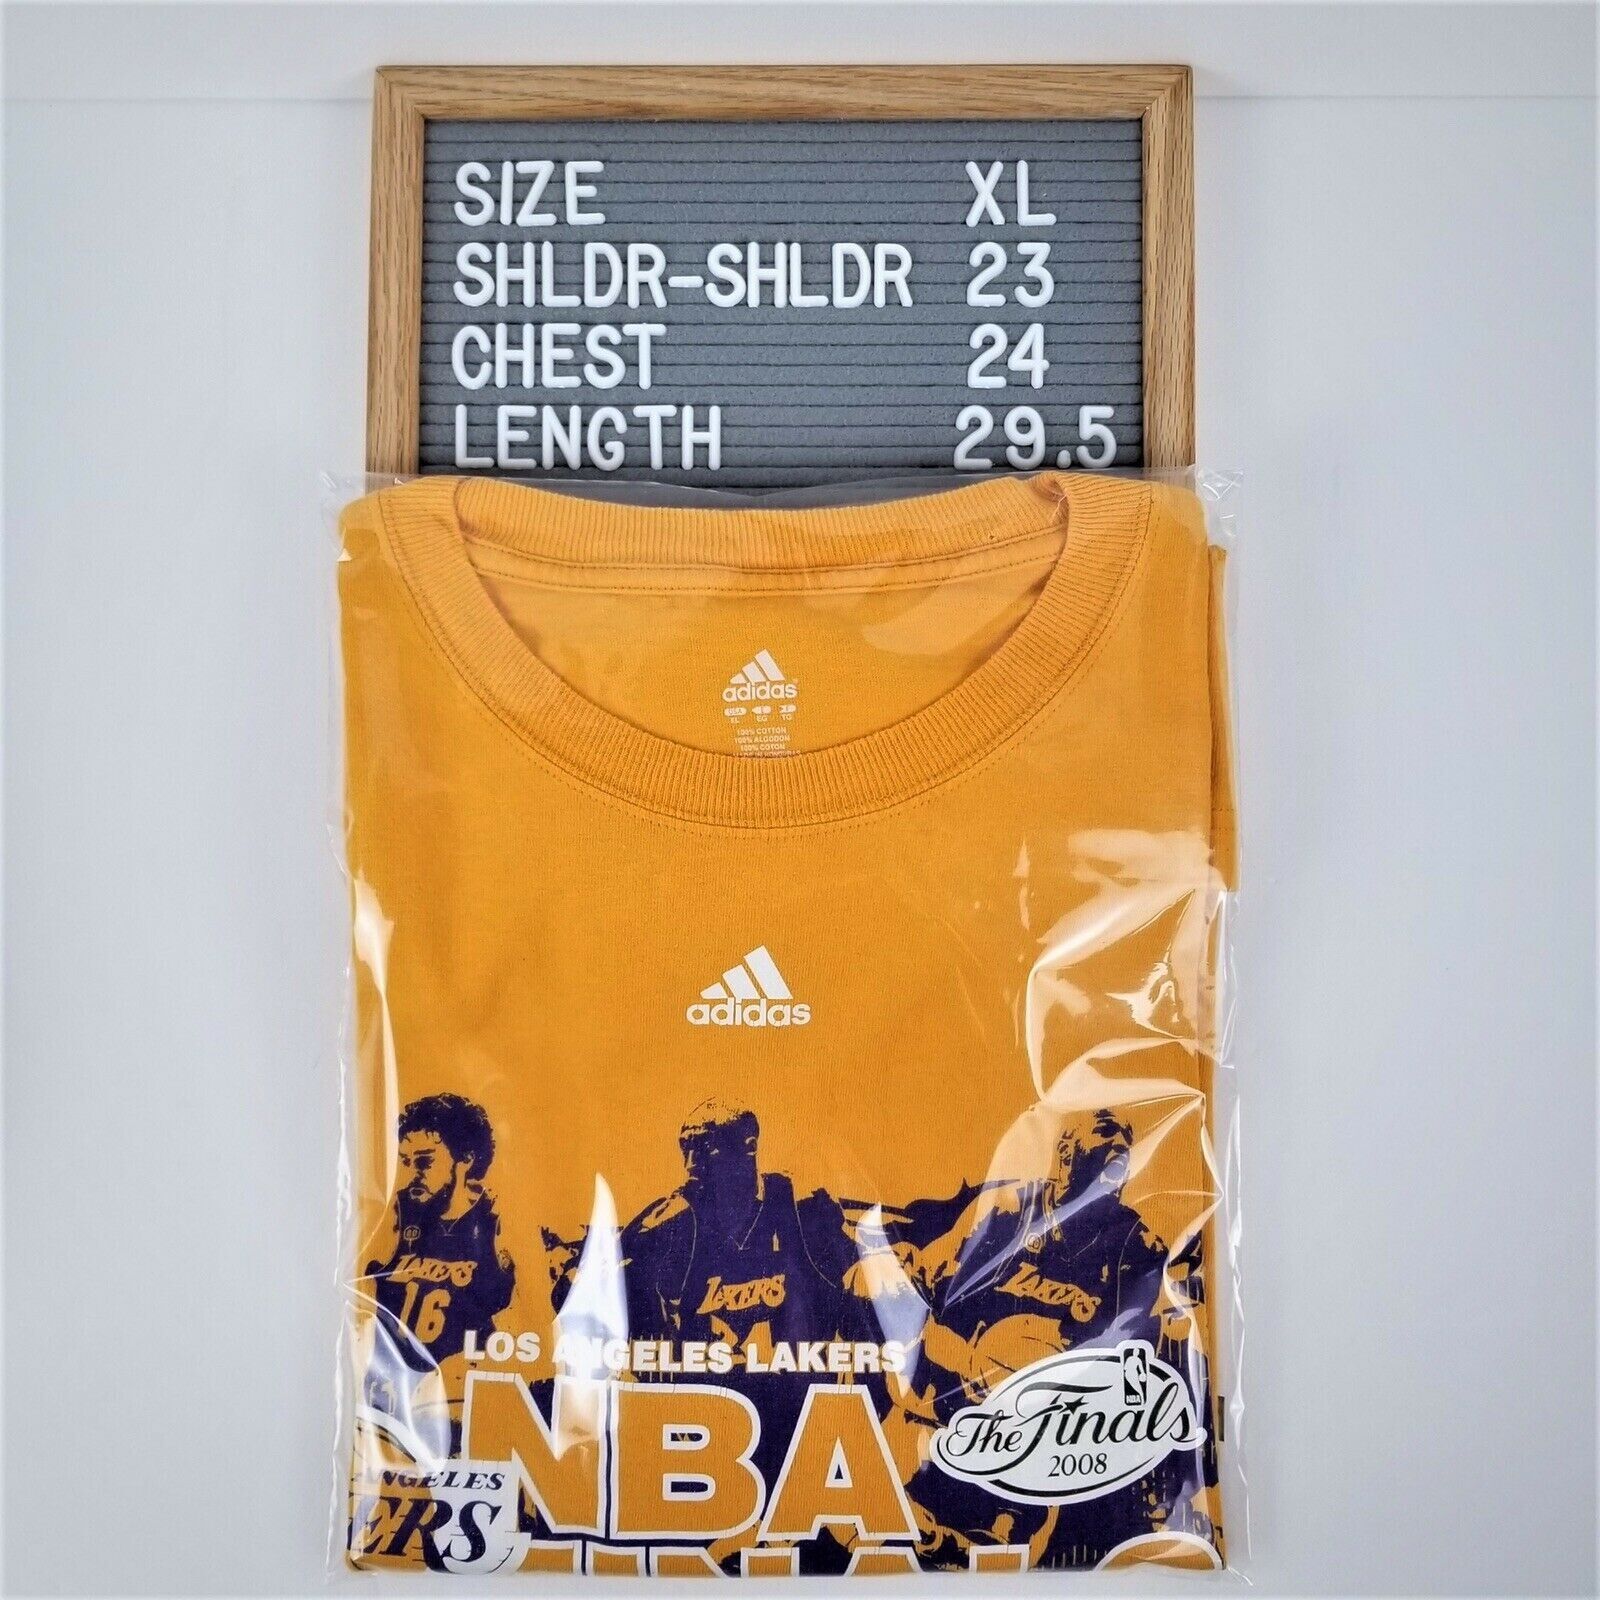 Adidas ADIDAS T-Shirt XL KOBE BRYANT #24 NBA Finals Size US XL / EU 56 / 4 - 1 Preview